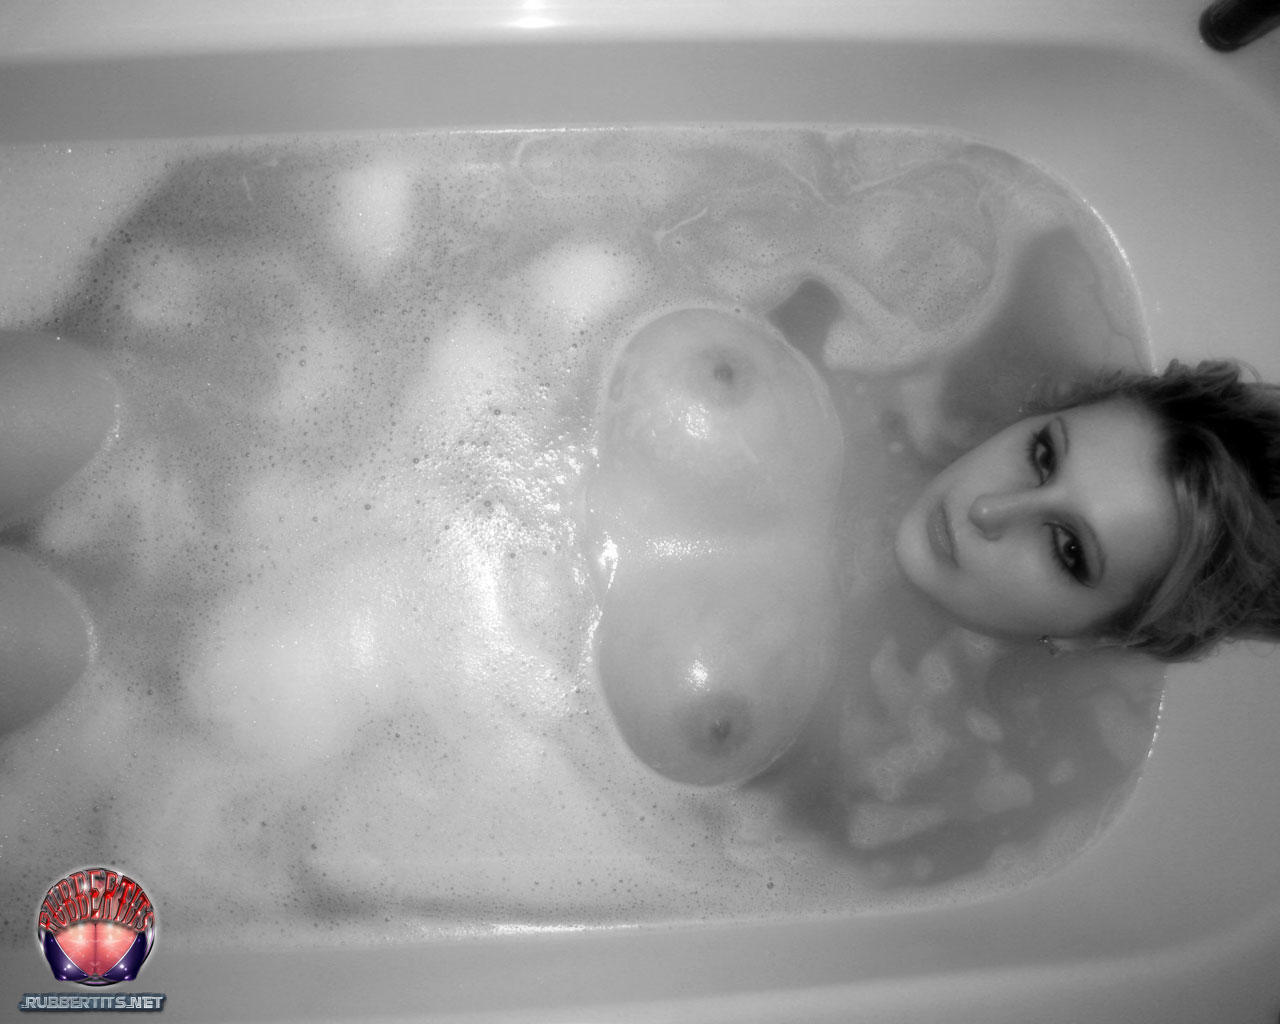 Rubber Tits Bathtime ポルノ写真 #426805766 | Rubber Tits Pics, Bath, モバイルポルノ